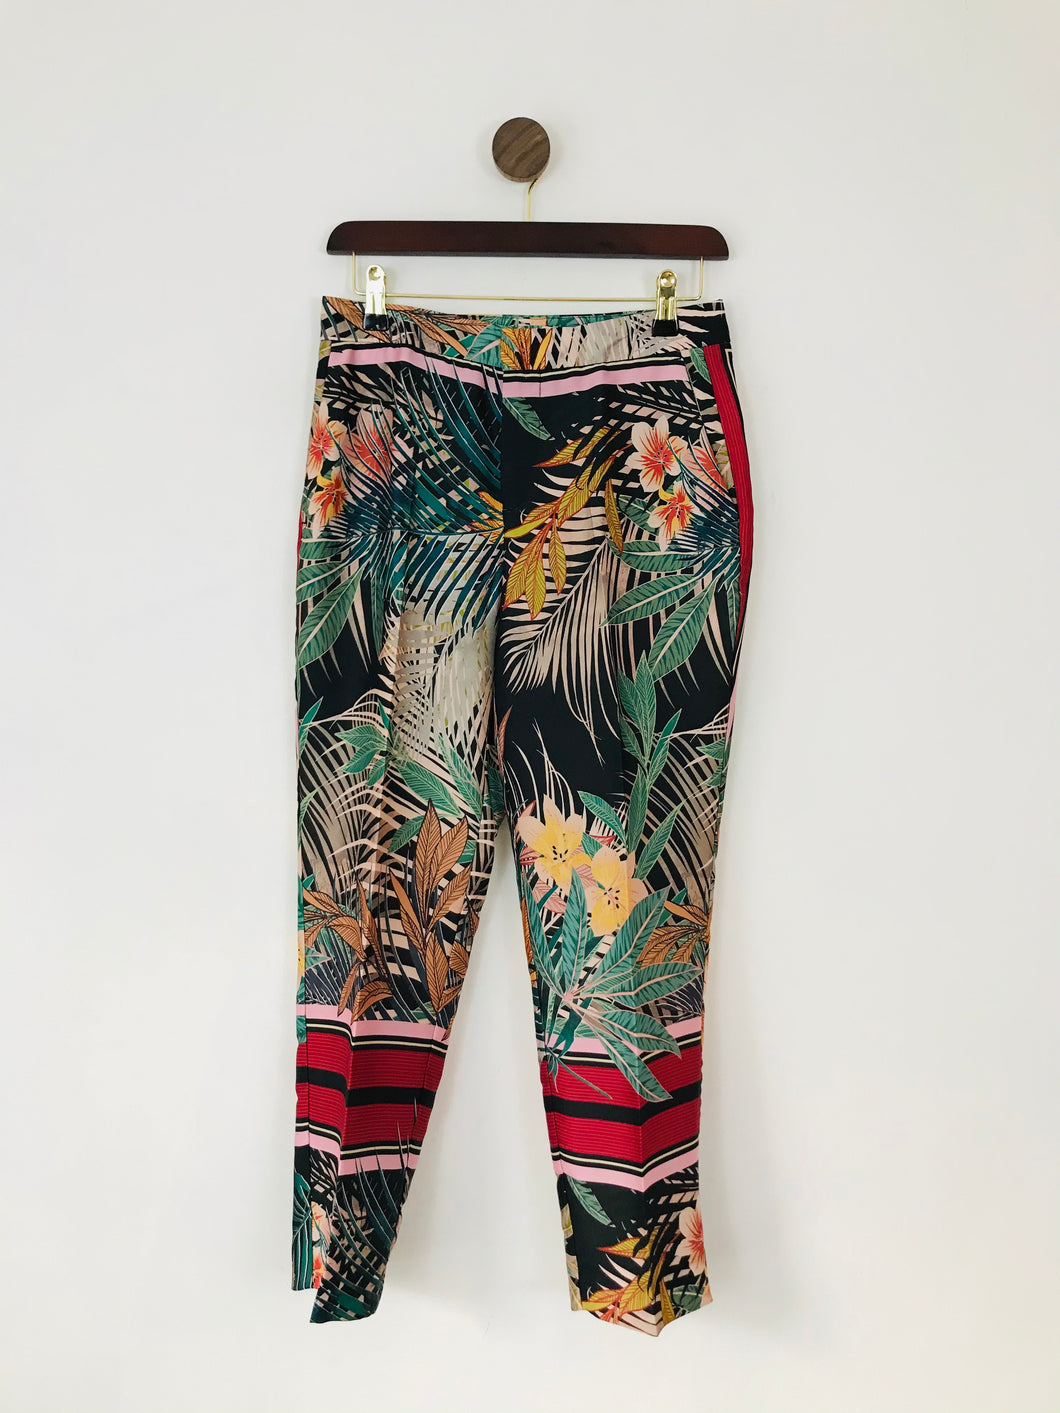 Zara Women’s Tropical Print Straight Trousers | XS UK6-8 | Multicolour